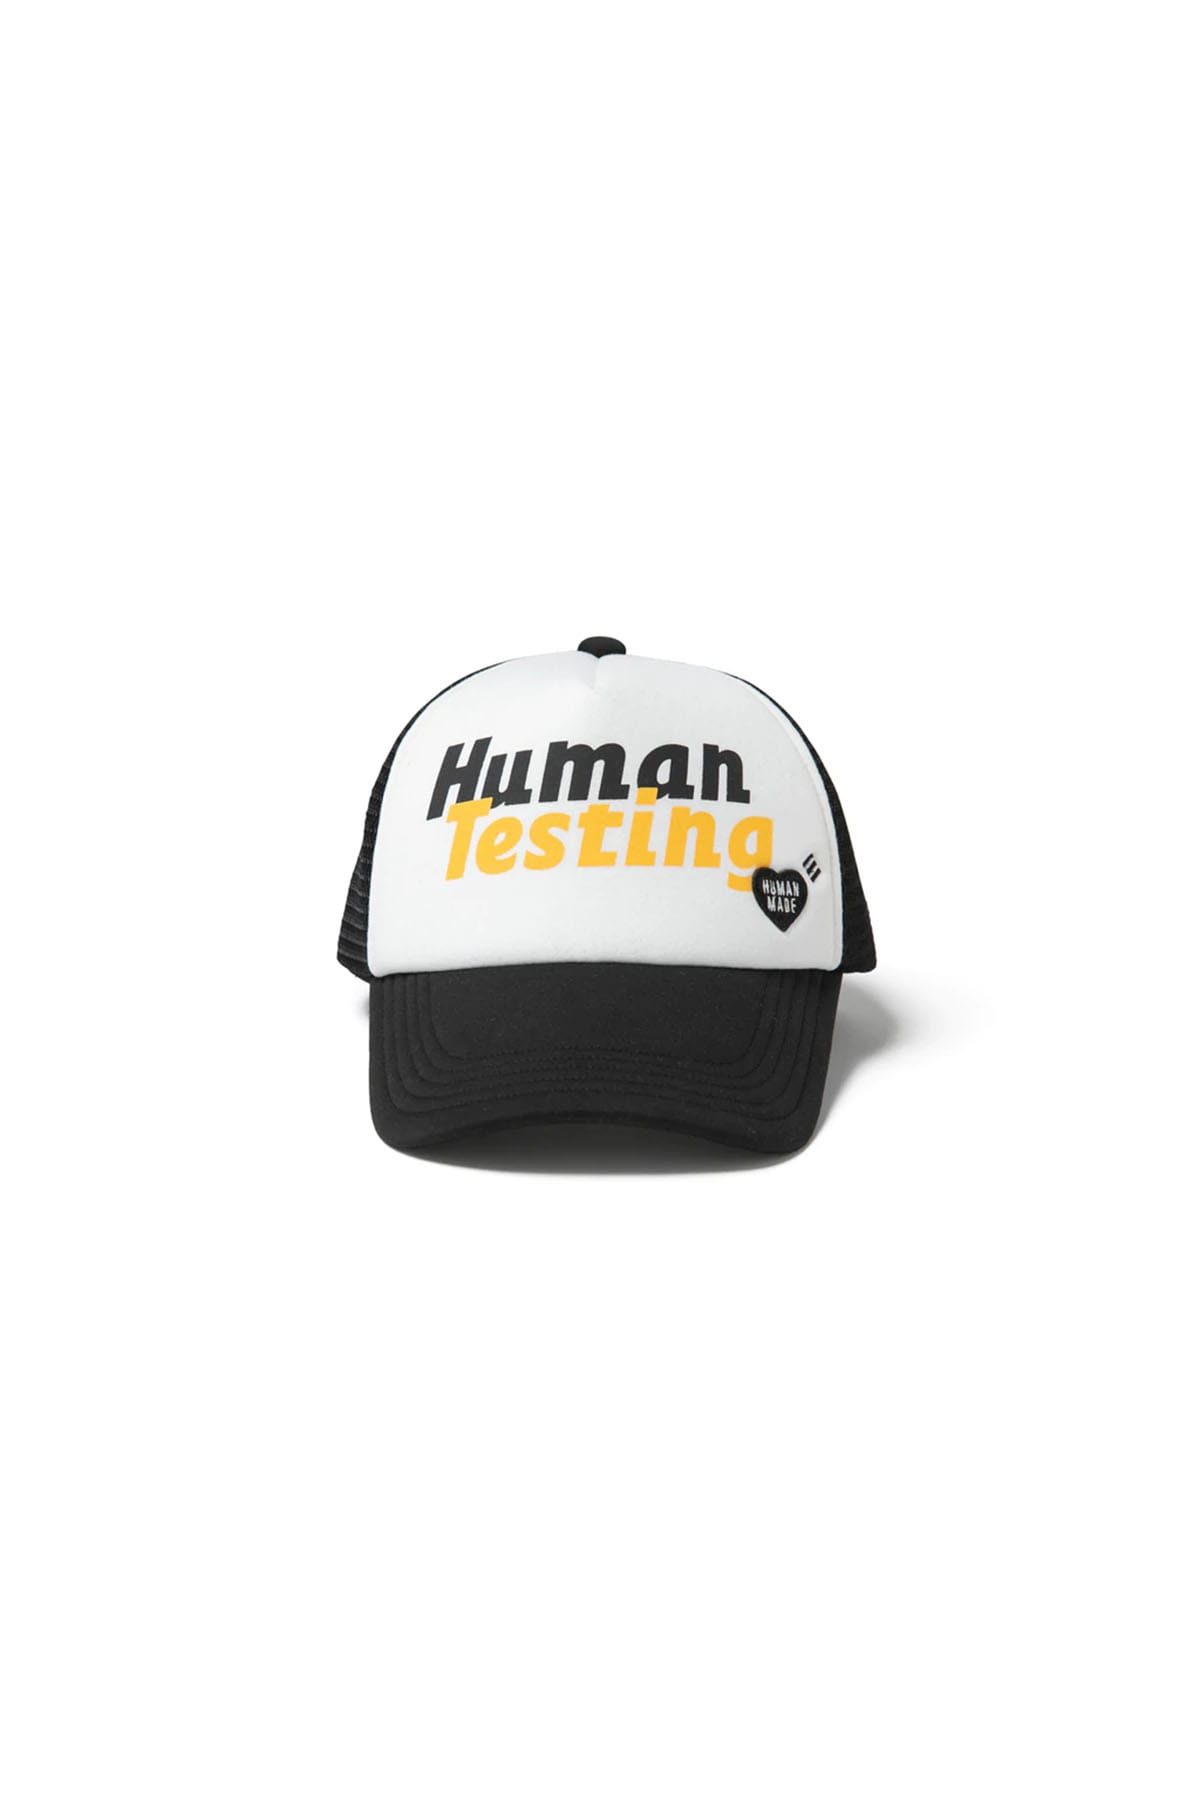 Human Made x A$AP Rocky 首個聯乘系列「Human Testing」正式登場 